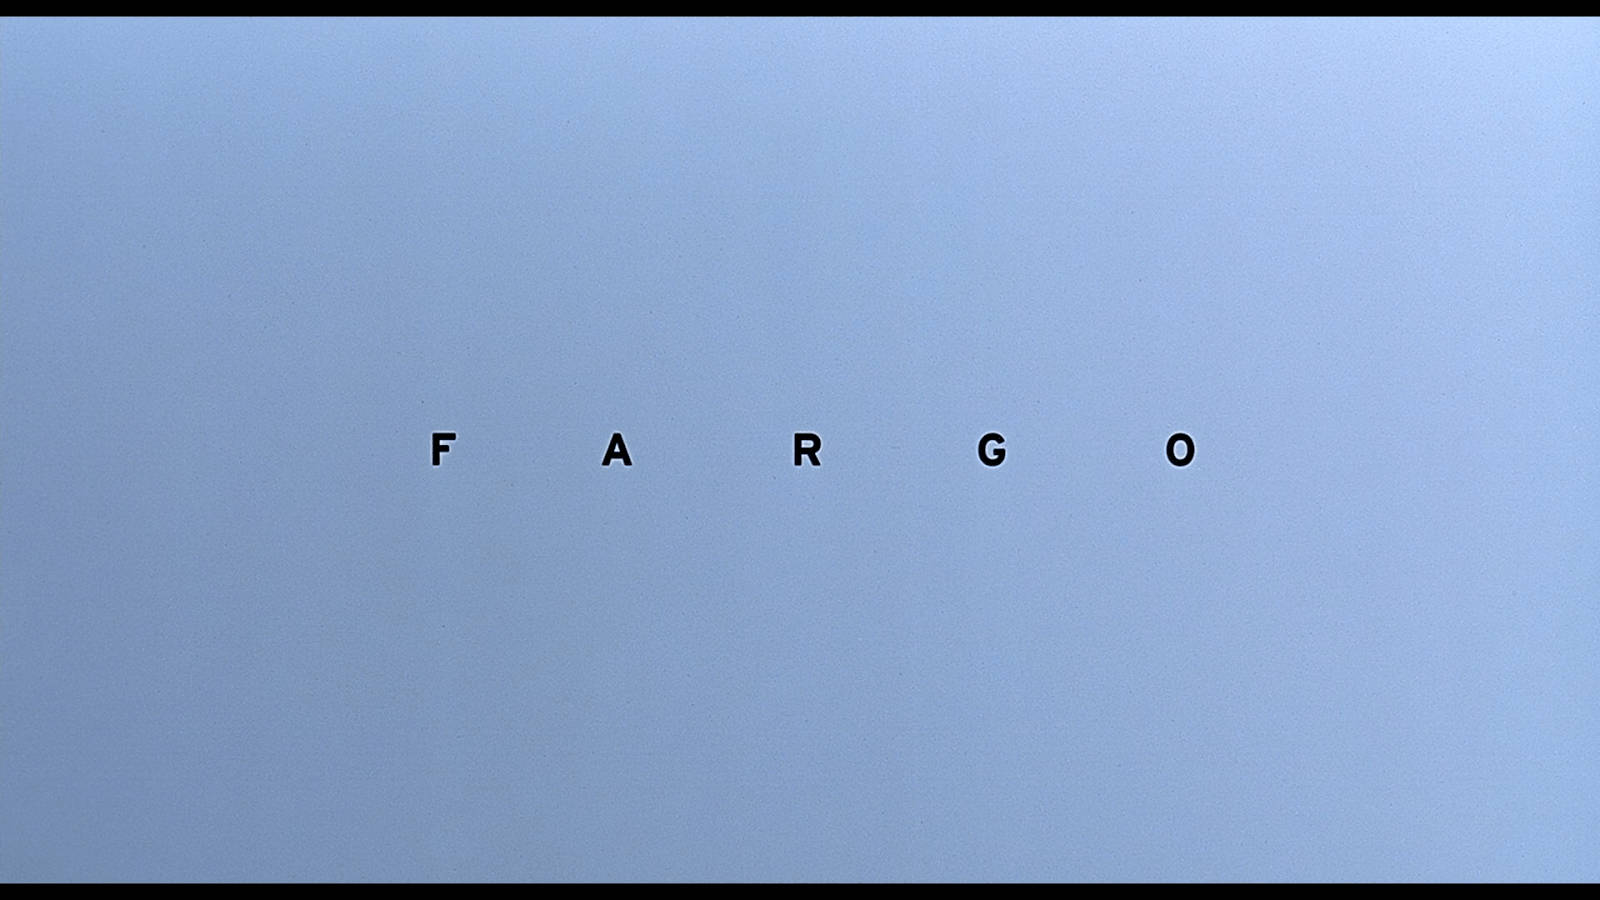 Fargo Minimalist Light Blue Background Wallpaper